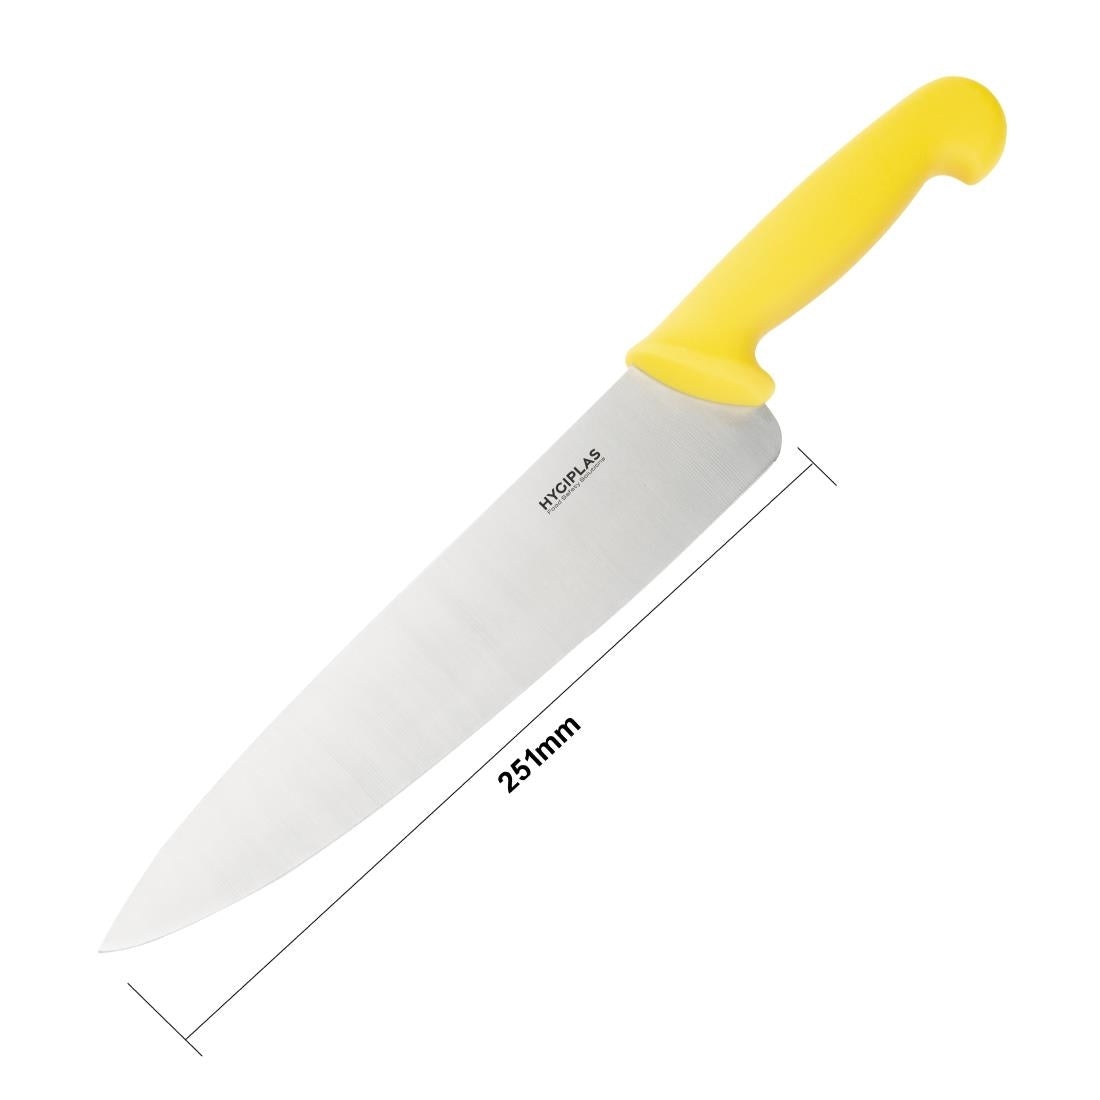 EDLP - Hygiplas Cooks Knife Yellow - 10"